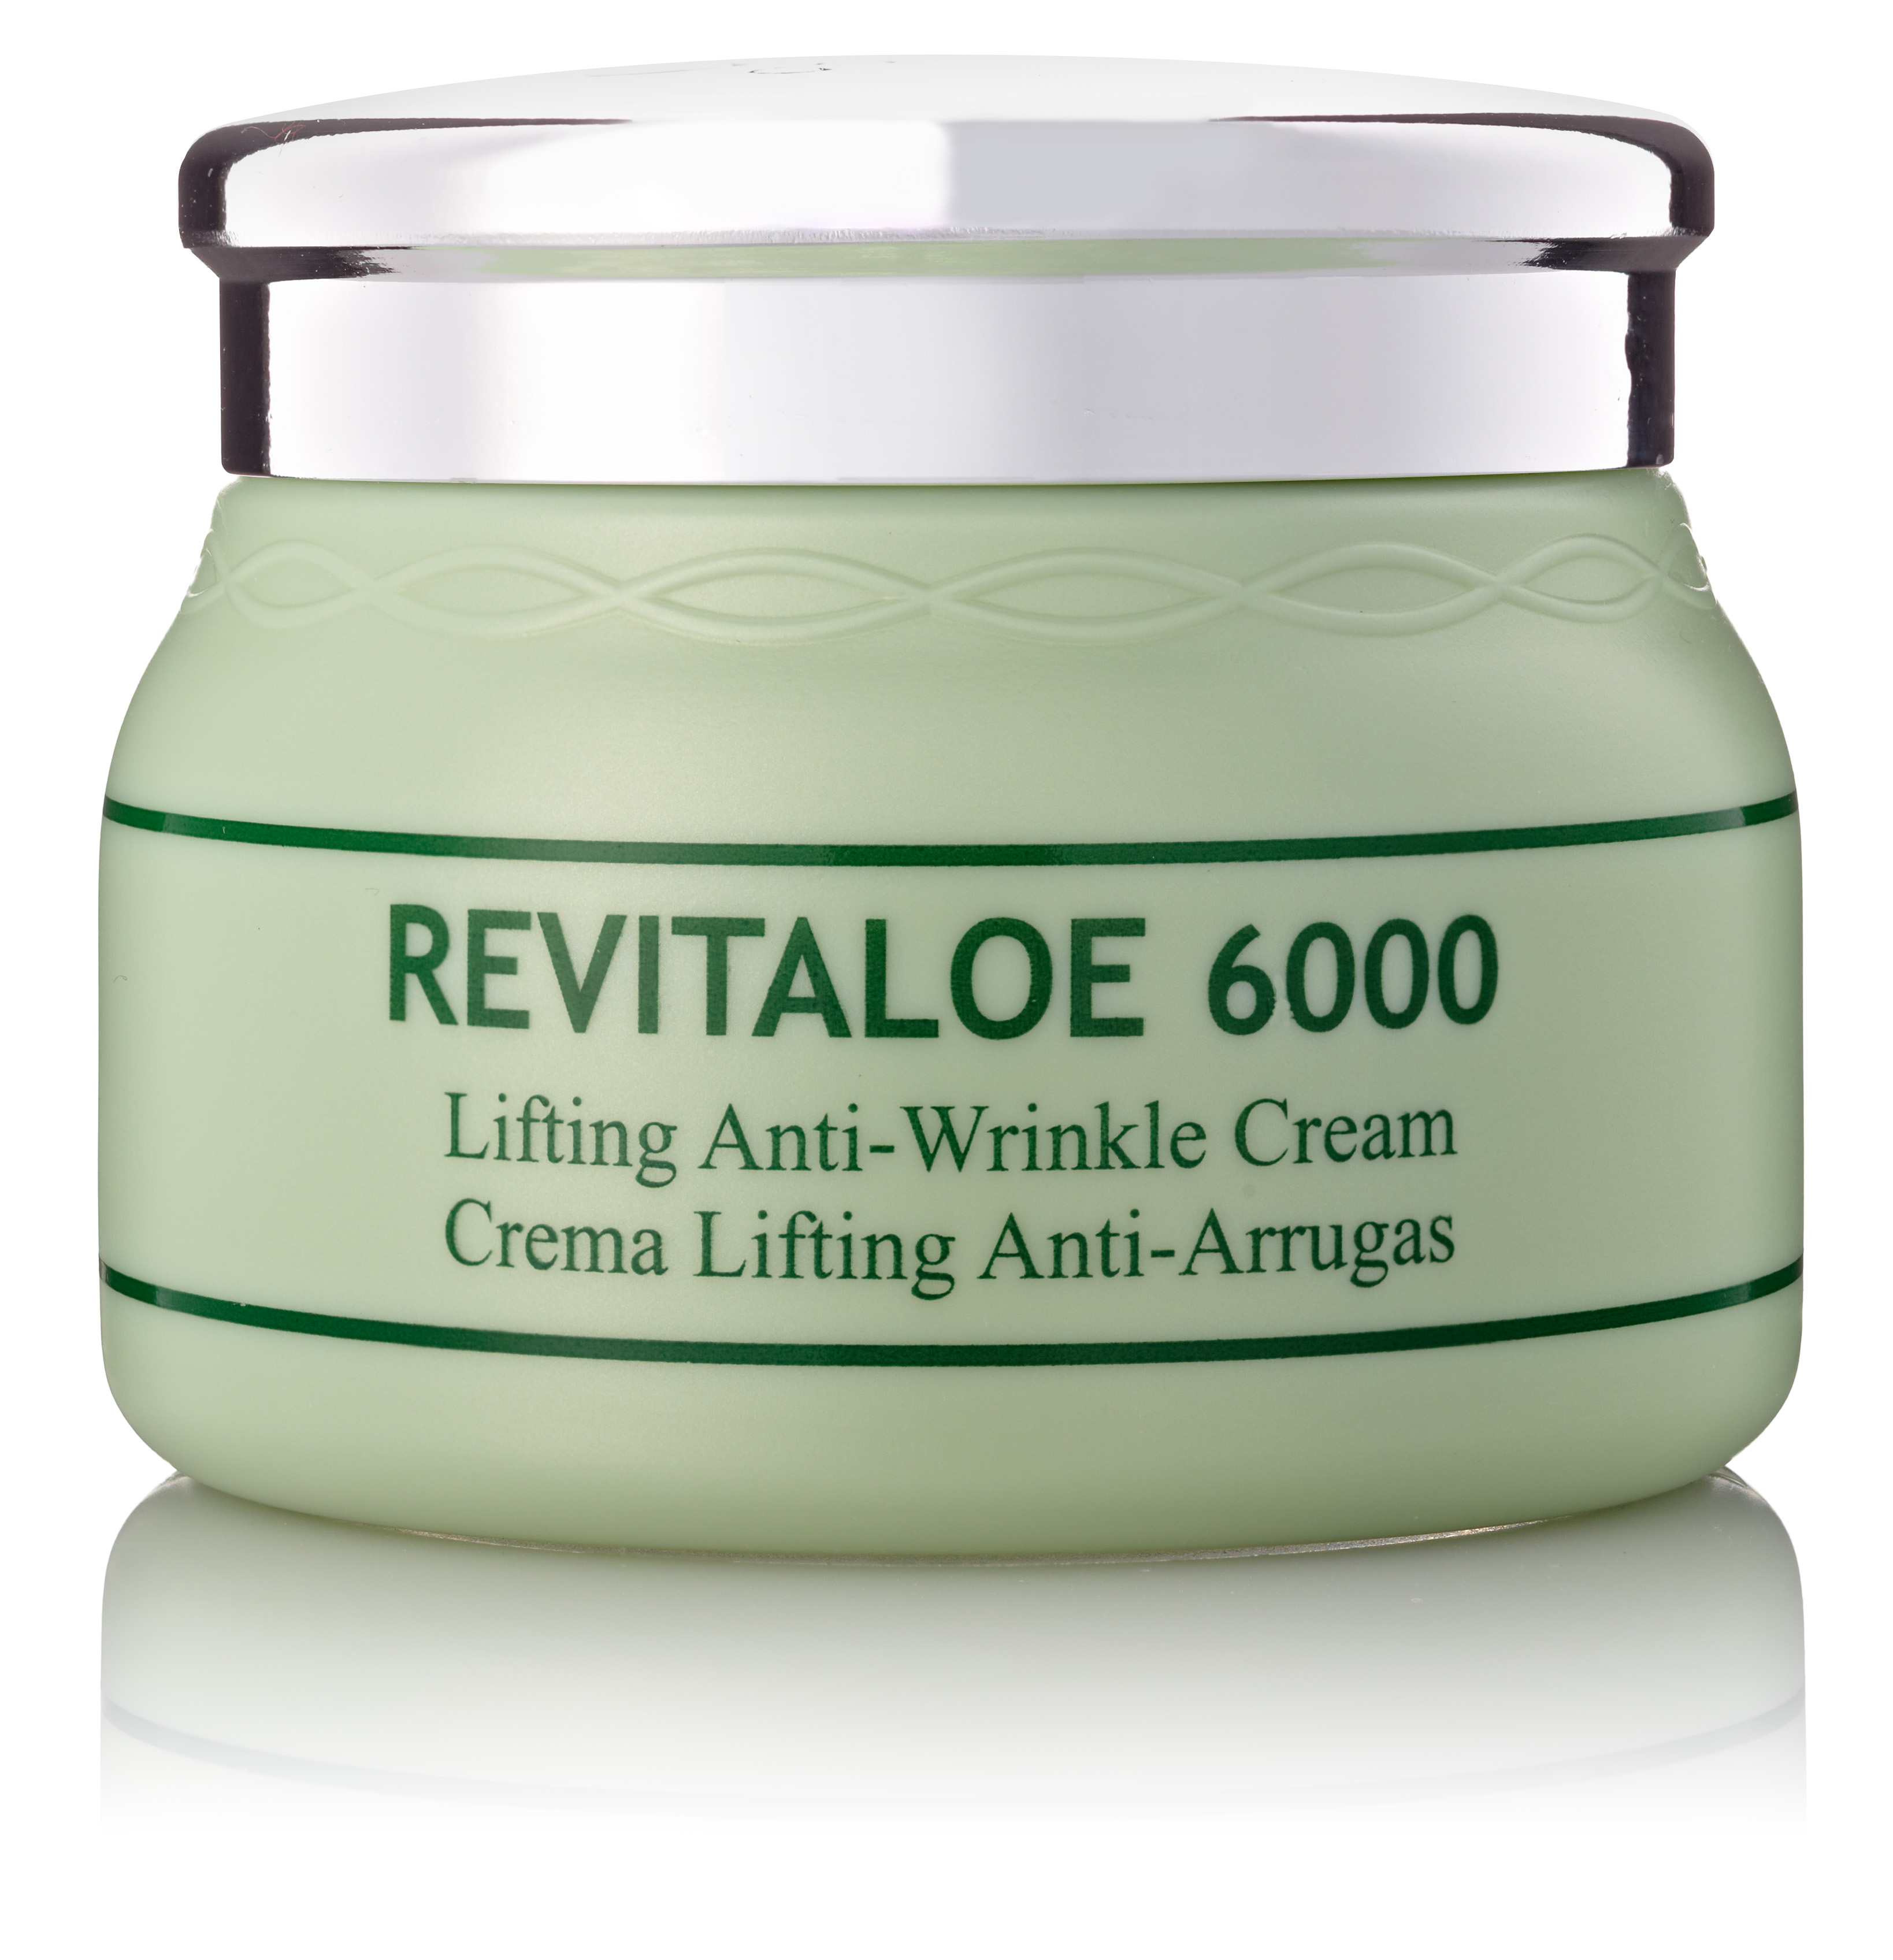 REVITALOE 6000 Lift | & Canarias innovative Cosmetics an Anti-Wrinkle Cream